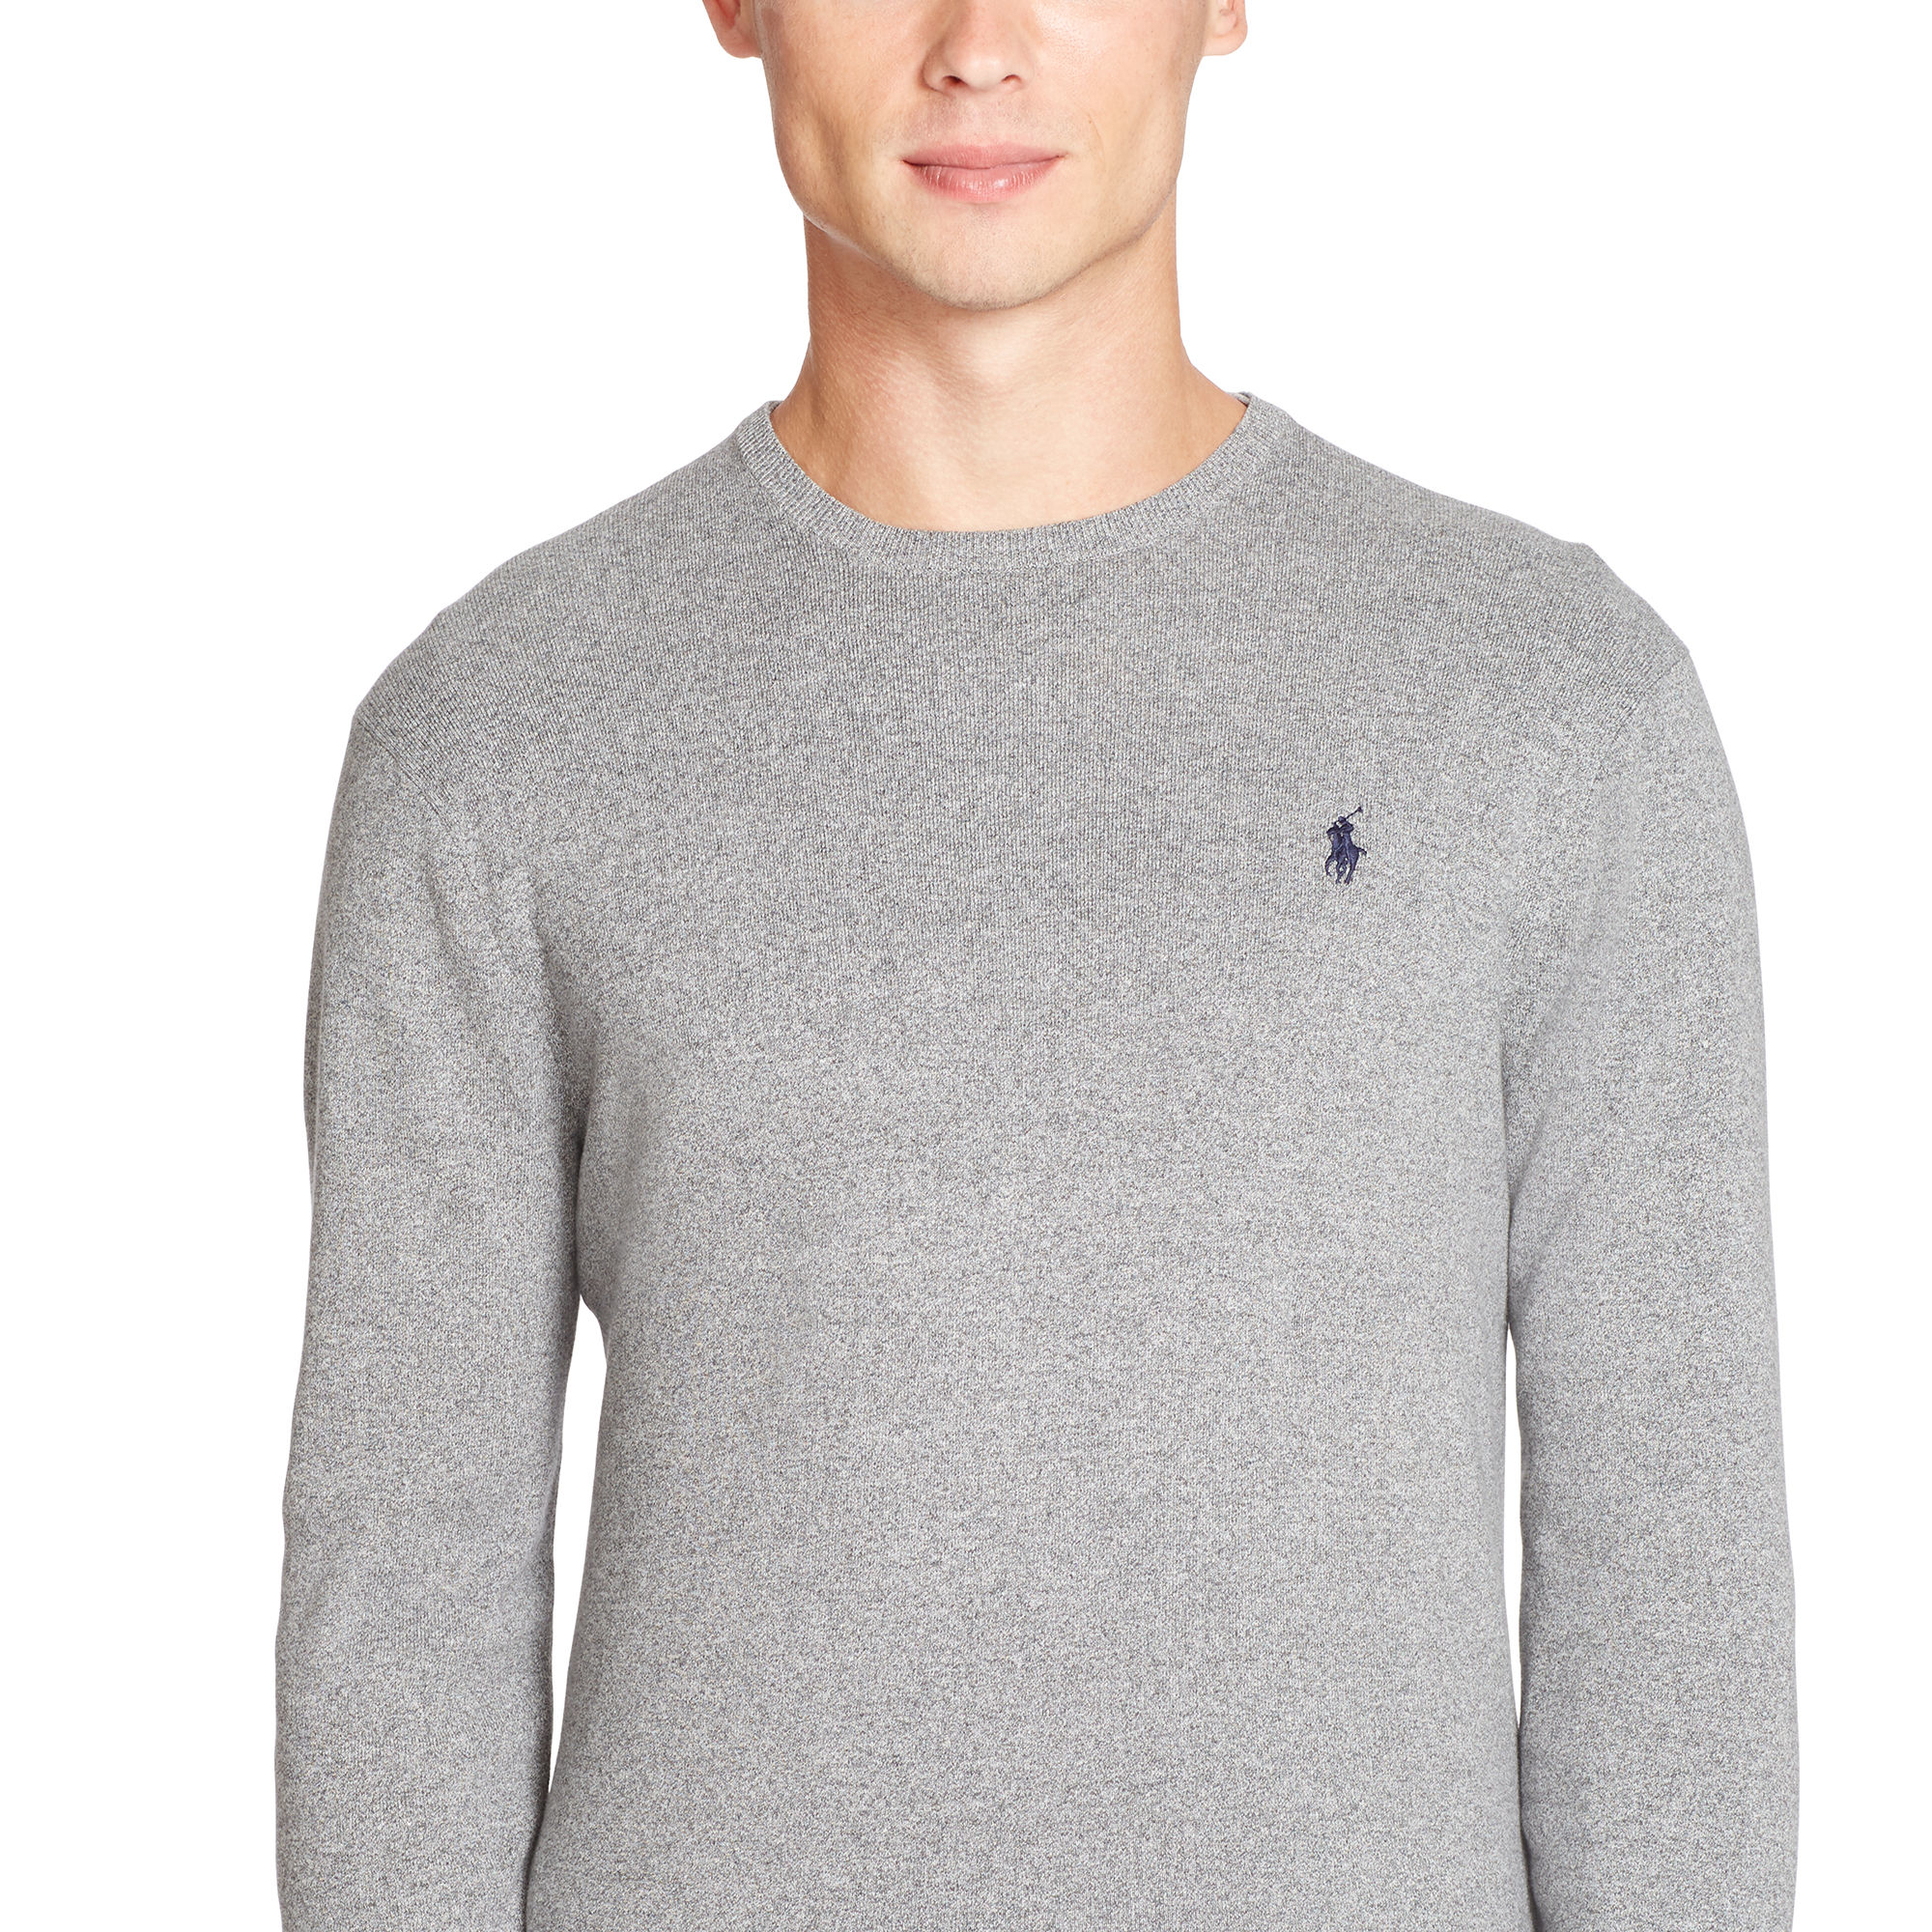 Polo Ralph Lauren Pima Cotton Crewneck Sweater in Grey Marl (Grey) for Men  - Lyst